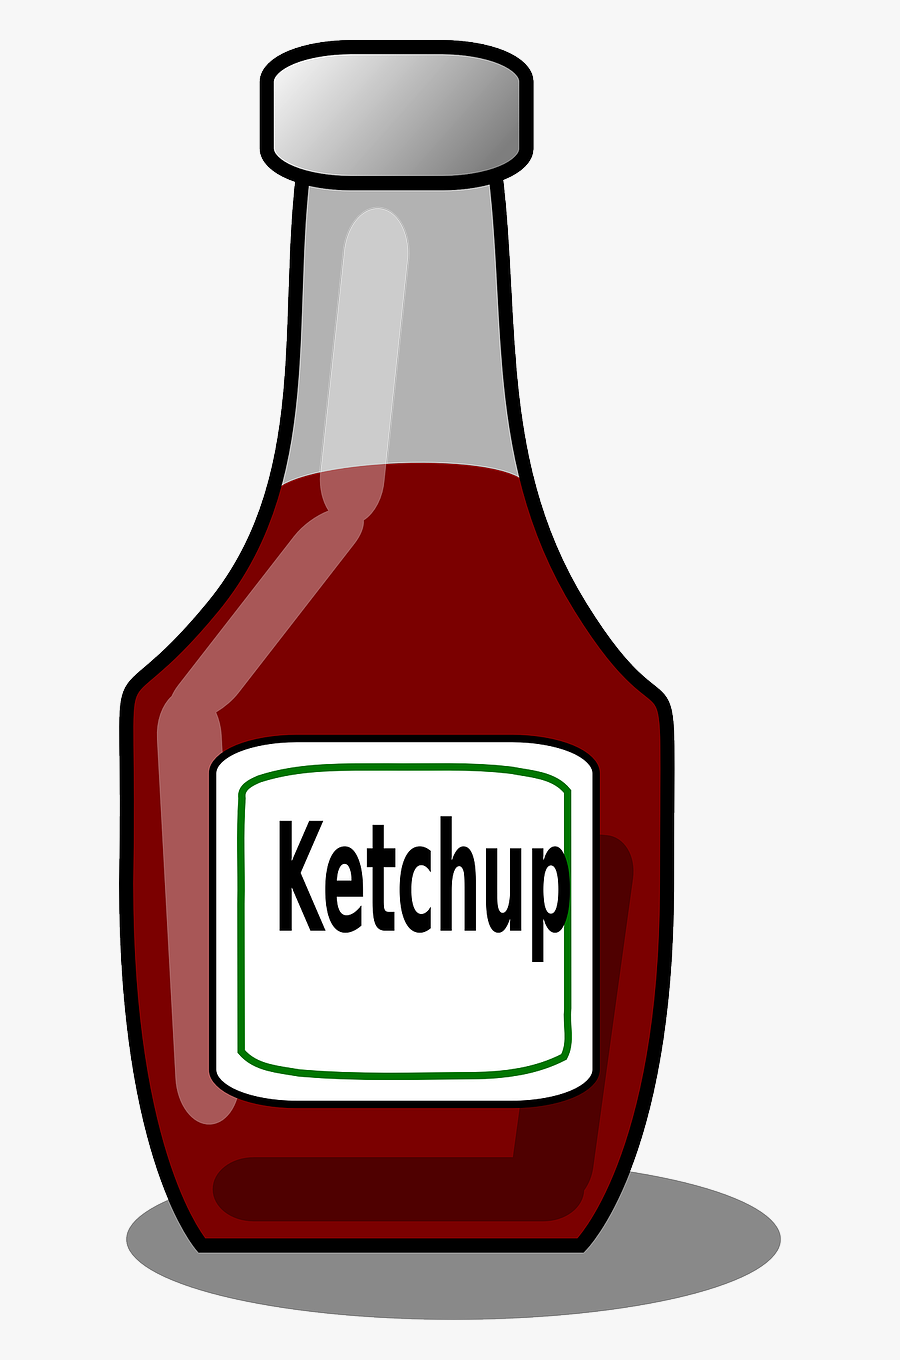 Ketchup Clipart Juice Bottle - Ketchup Bottle Clipart, Transparent Clipart